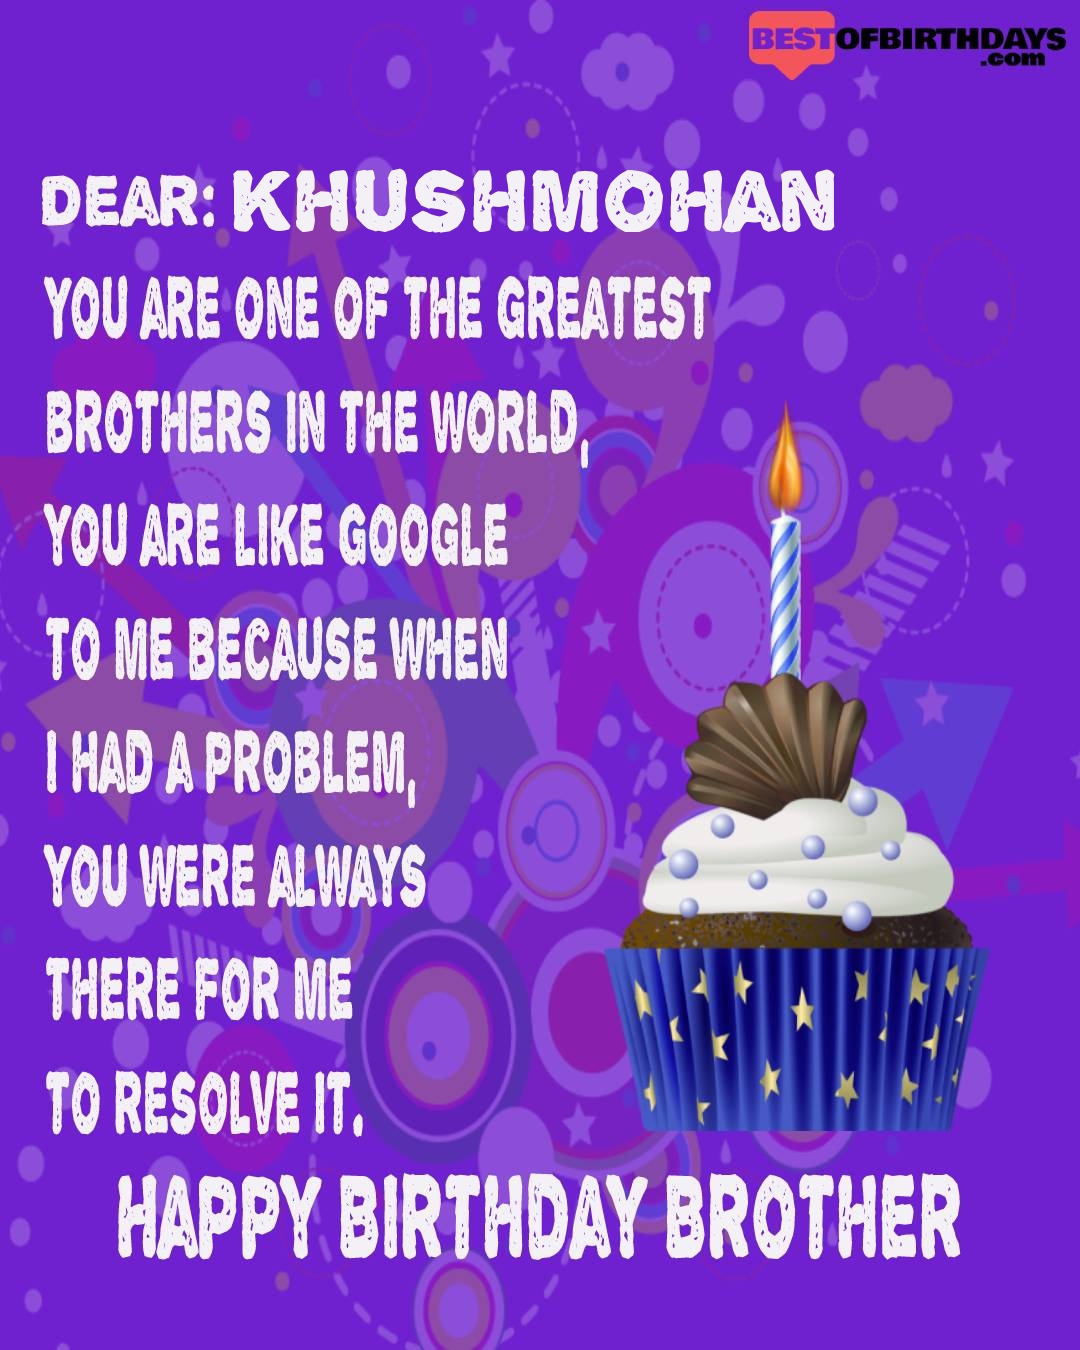 Happy birthday khushmohan bhai brother bro